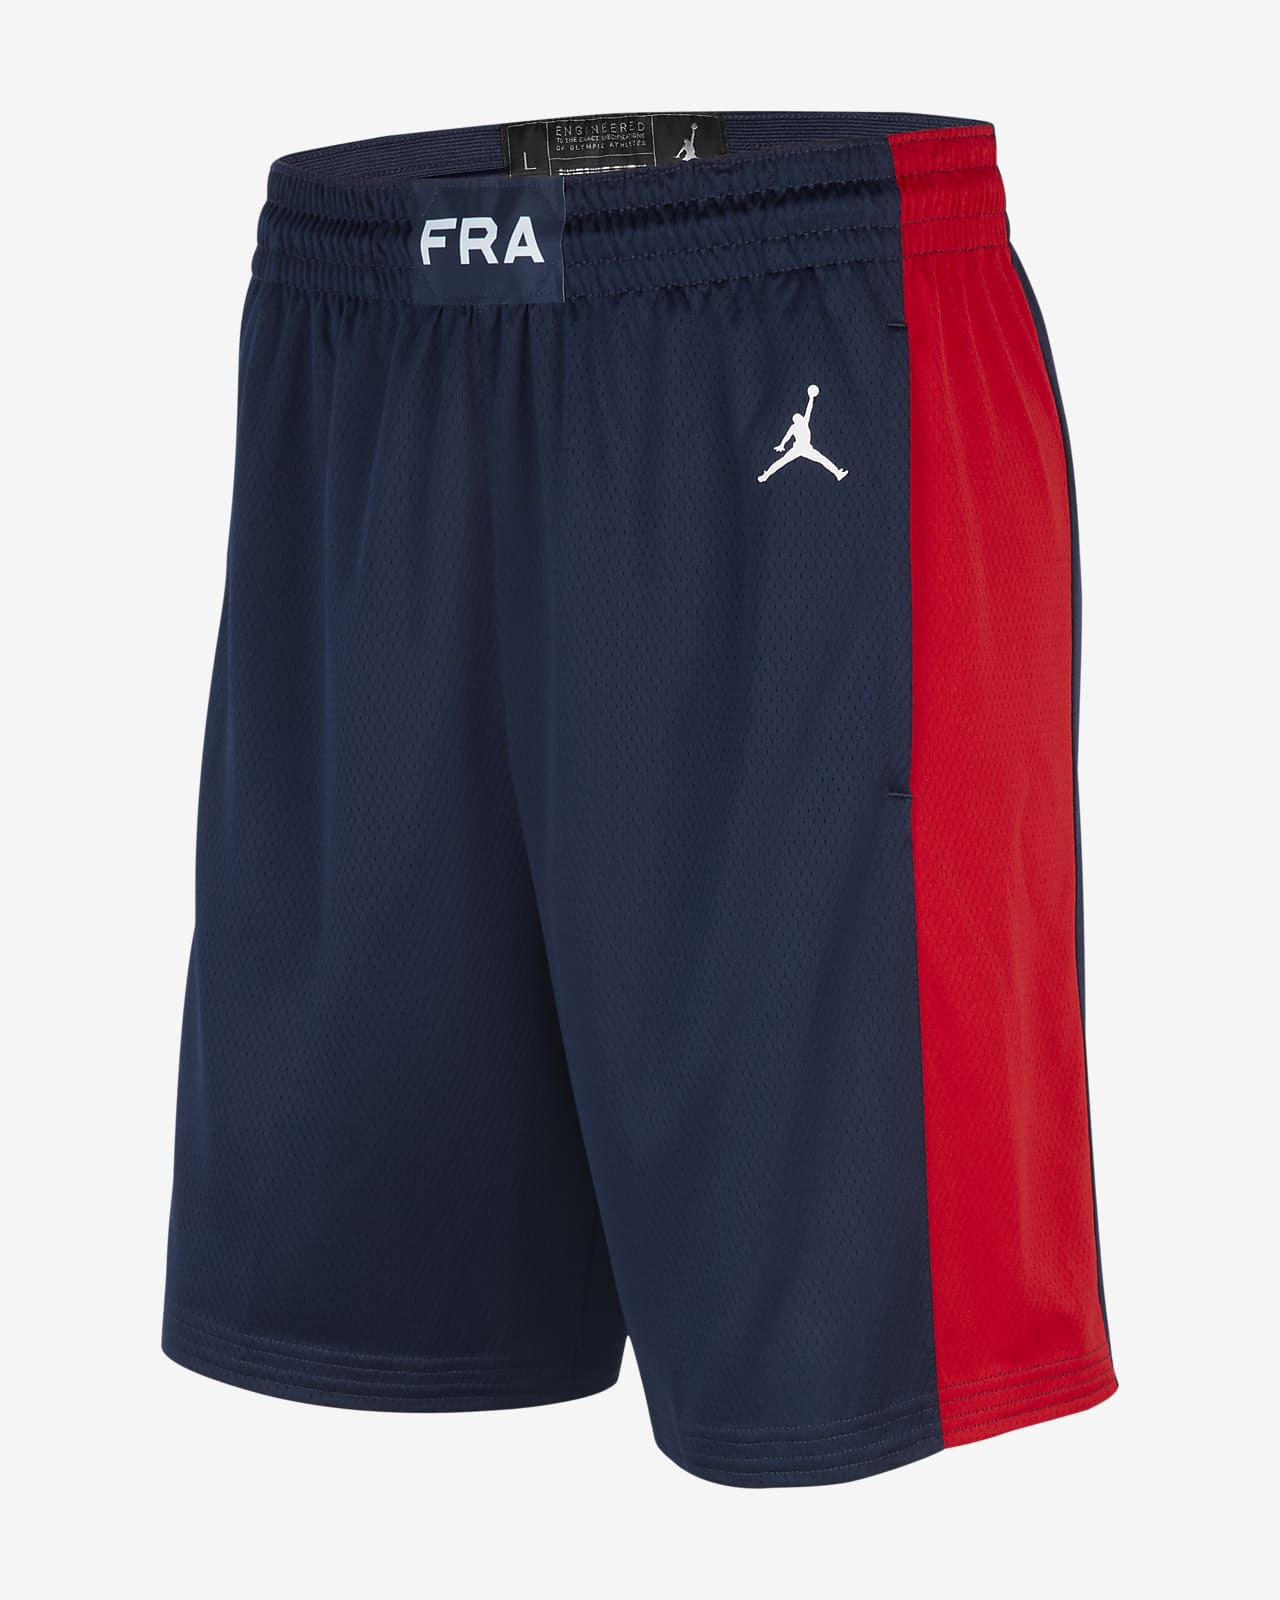 France Jordan (Road) Limited Men's Basketball Shorts